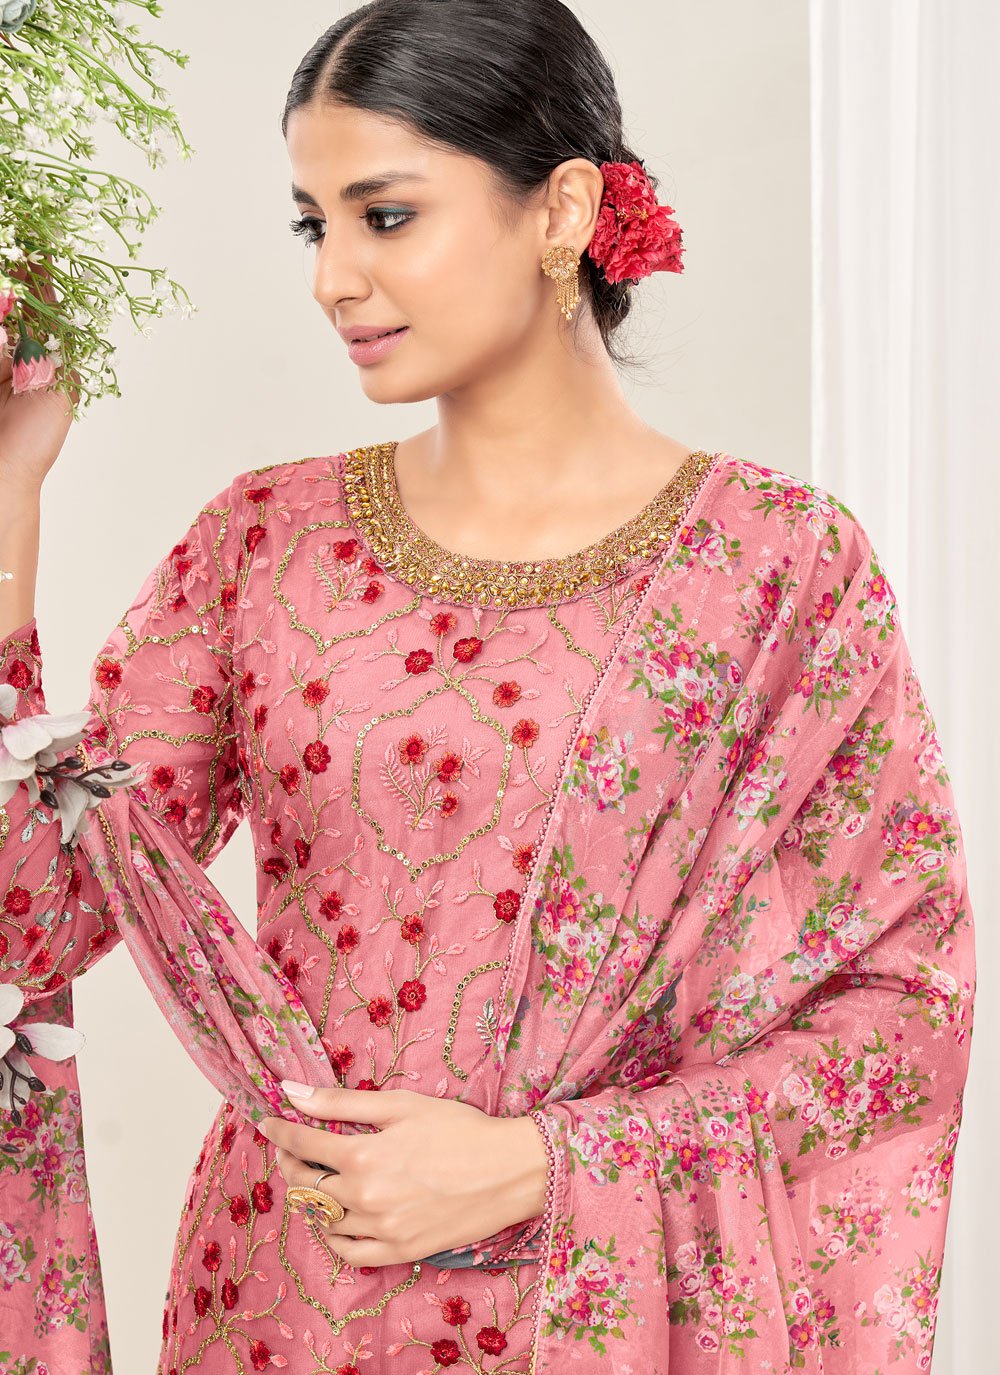 Buy Georgette Punjabi Suit Online at lowest price - Punjabi Suits